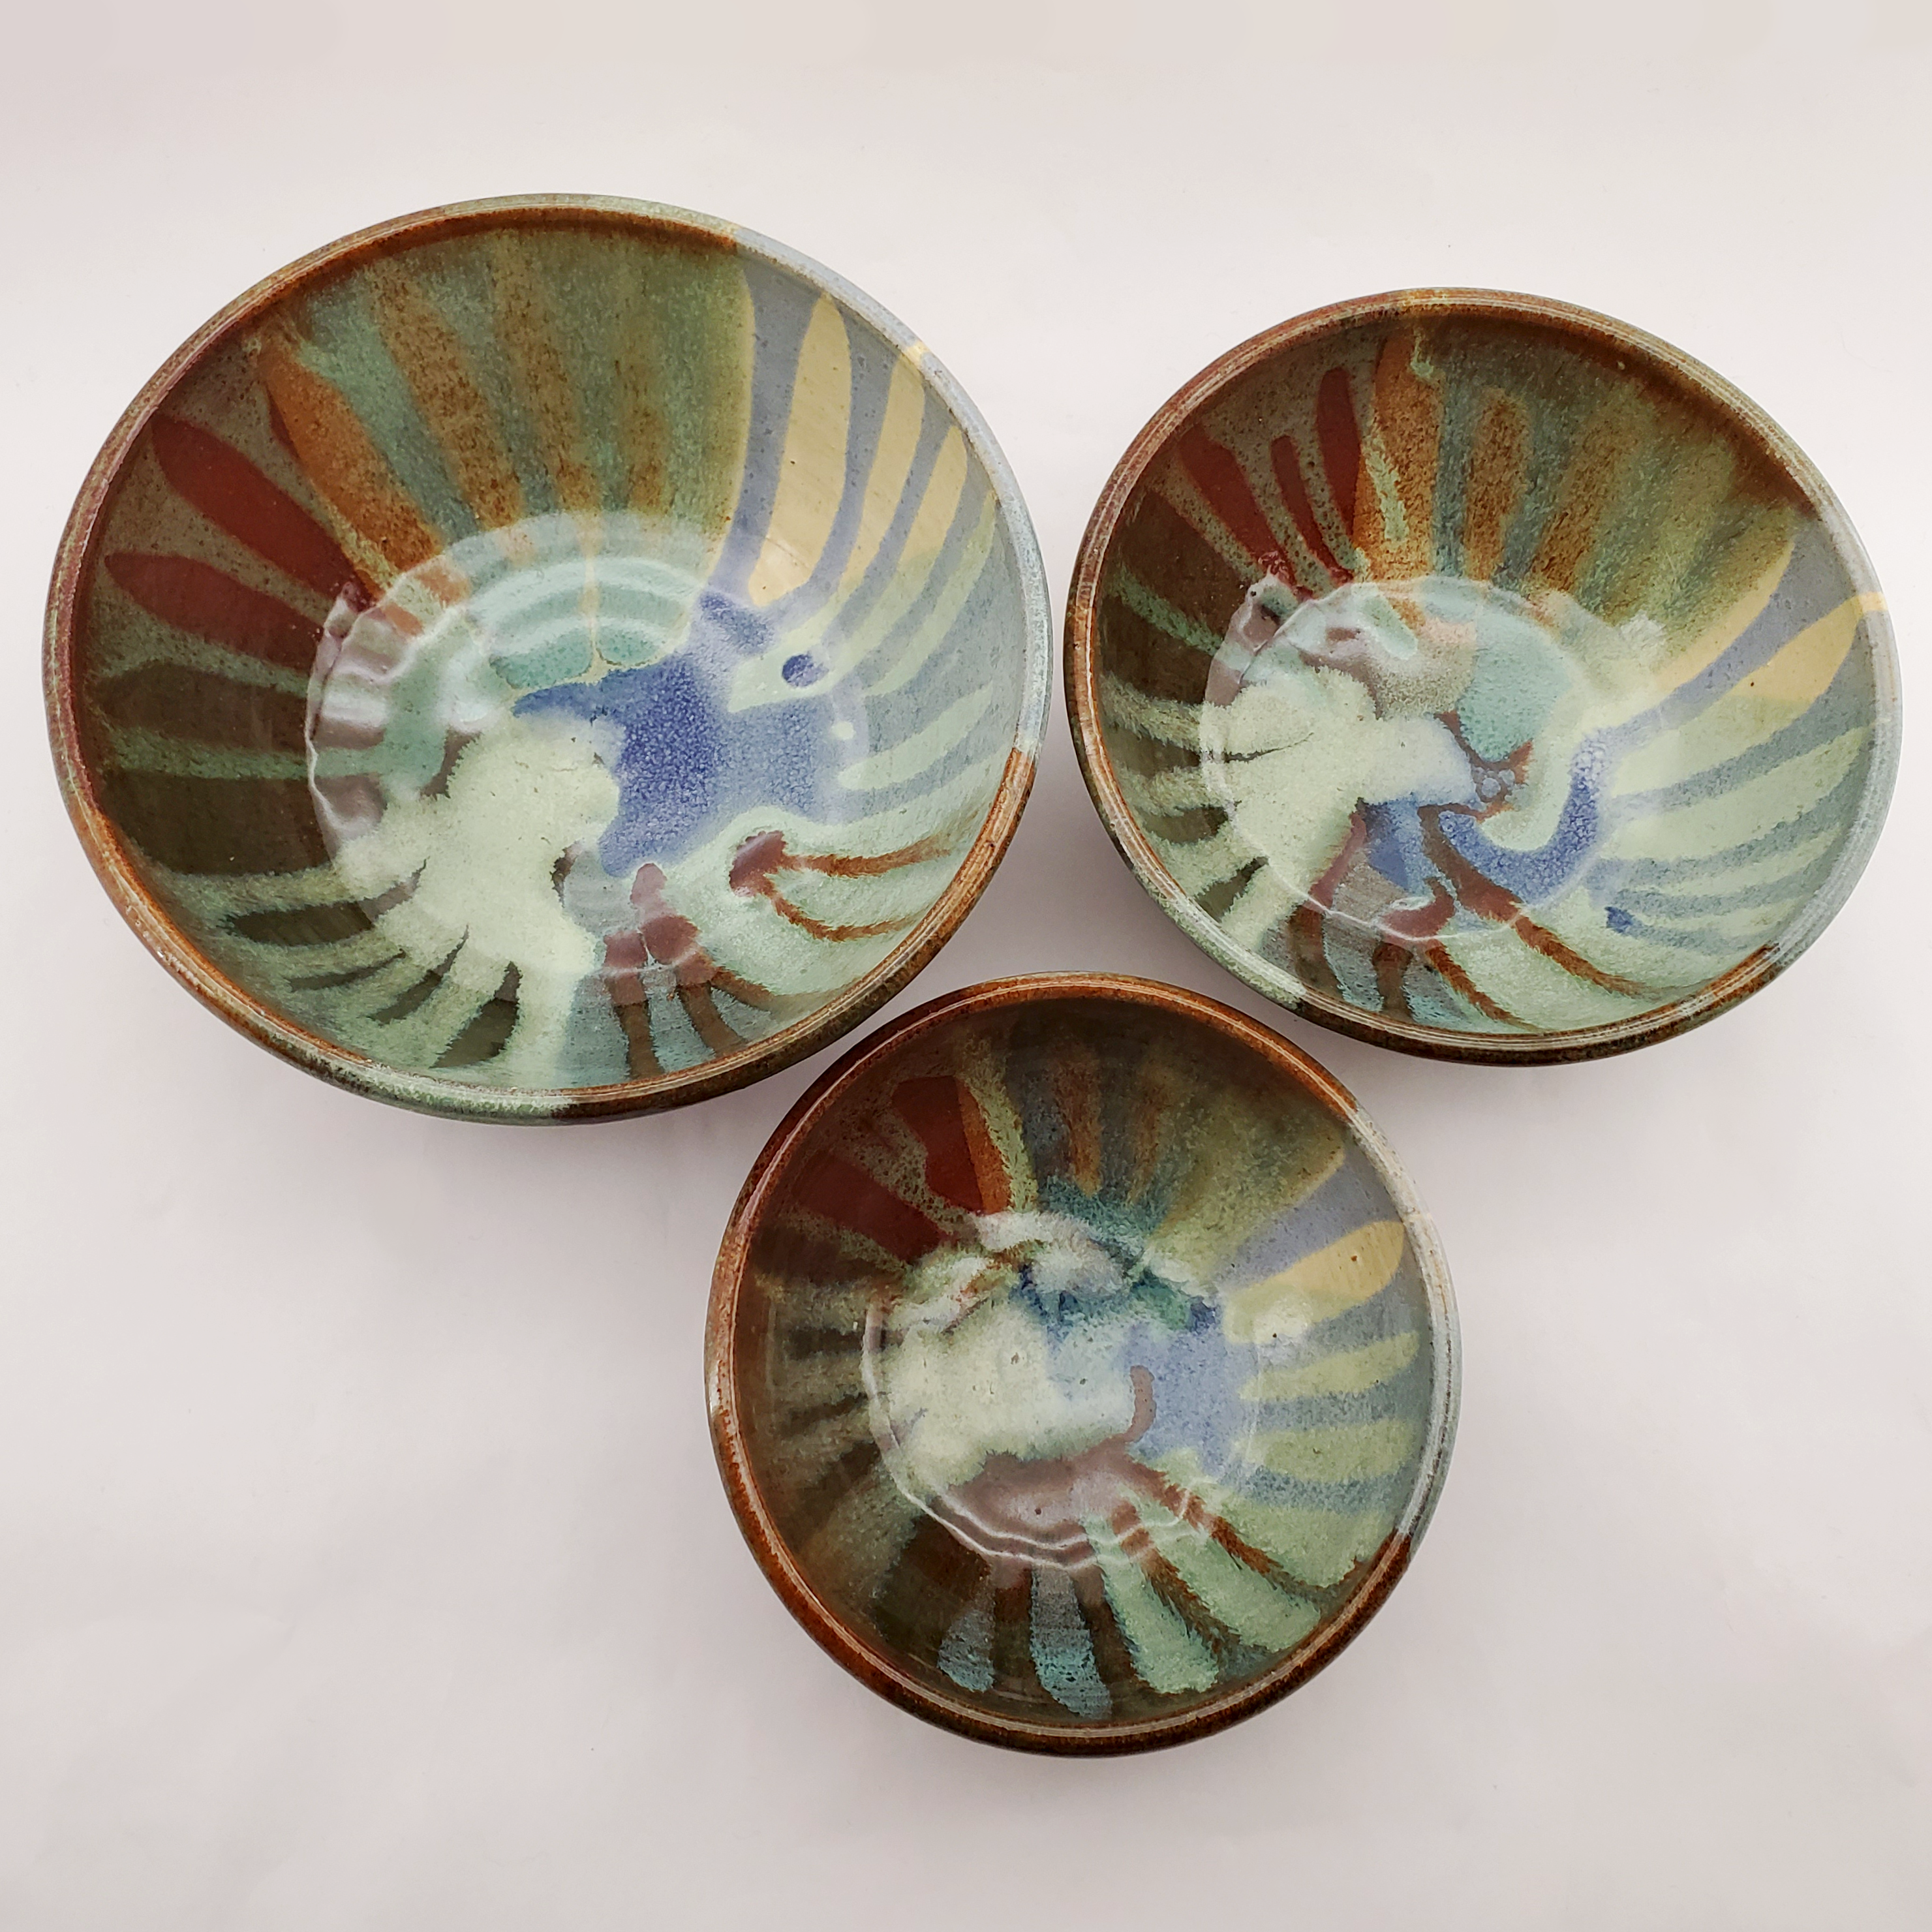 Beautiful set of nesting bowls glazed in earthy tones and colors. Handmade on Vashon Island by Abraham McBride Pottery. Local ceramics artist, Seattle Washington.